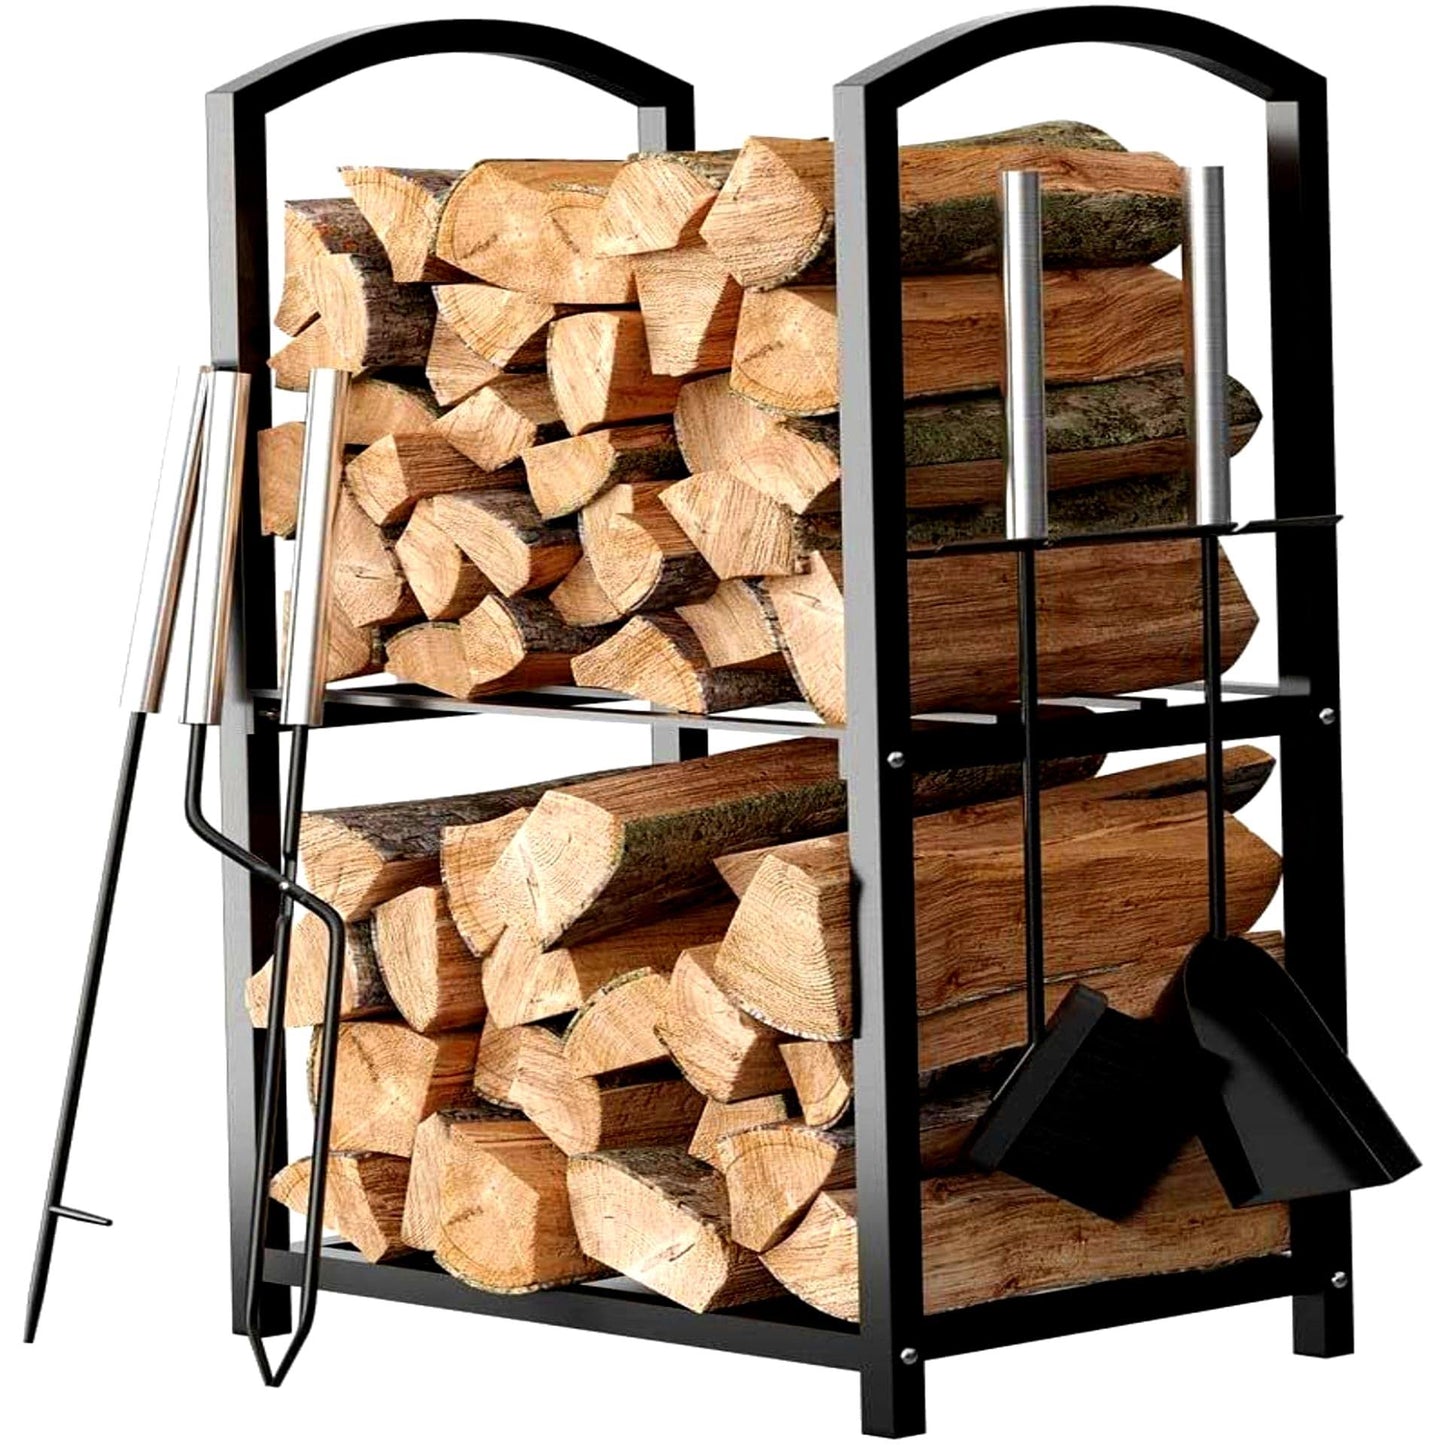 Firewood Rack Outdoor Indoor - 2-Tier Firewood Holder With Fireplace Tools Set, Brush, Shovel, Poker, Tongs - Waterproof Steel Pipe Log